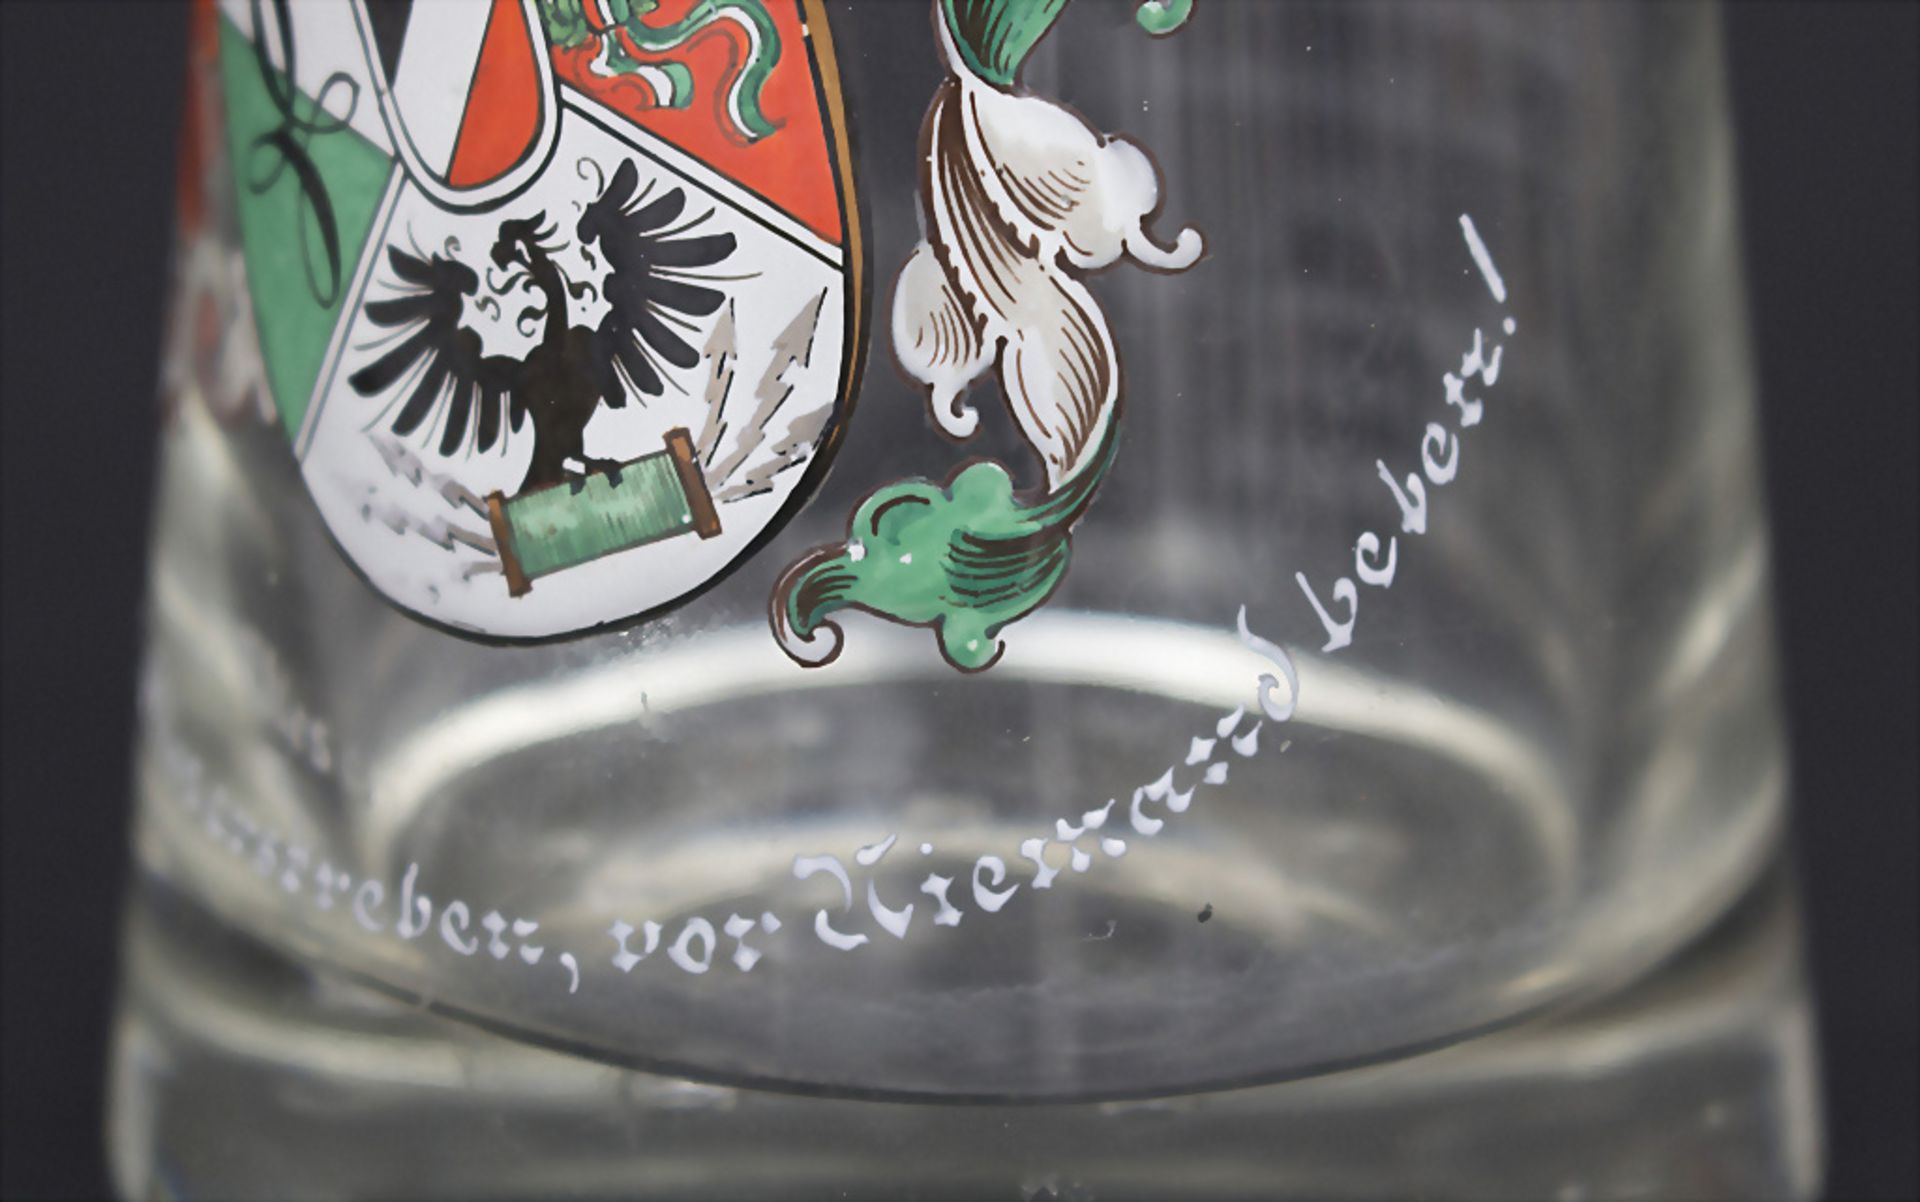 Burschenschaft-Schenkkrug / A fraternity glass jug, um 1903 - Image 7 of 9